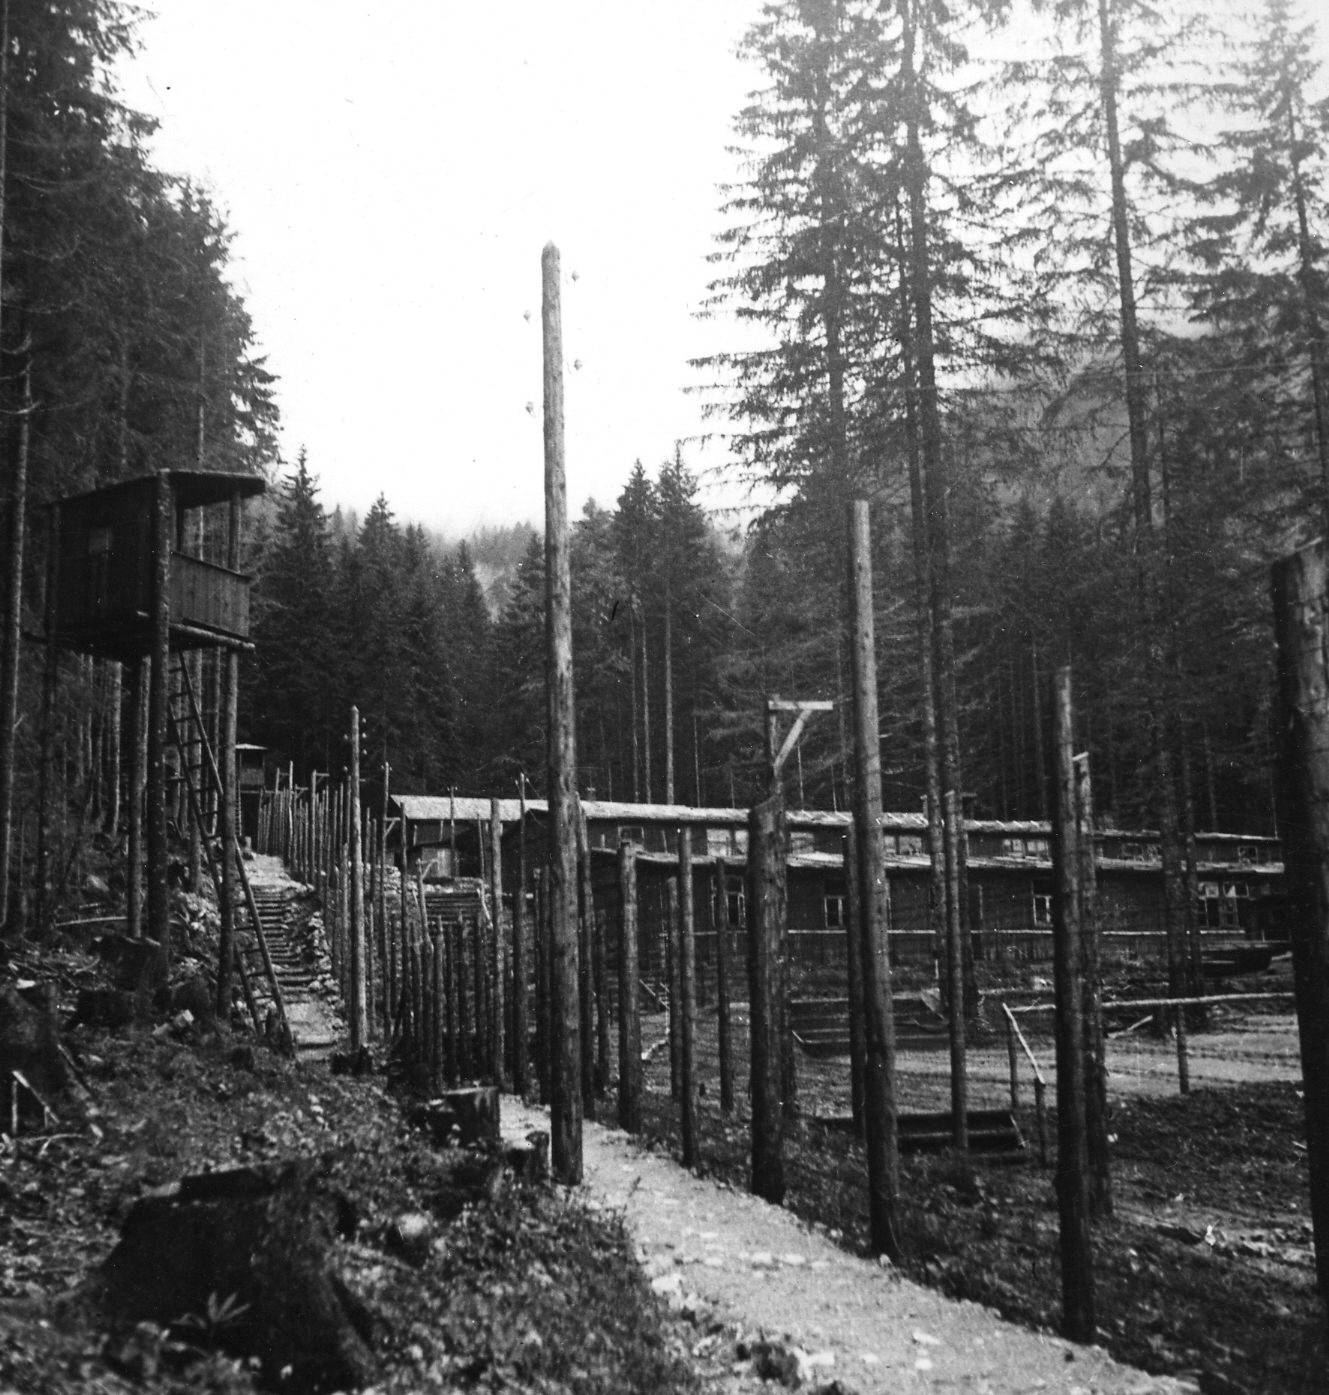 Baracken des aufgelassenen KZ-Loibl Nord in Blickrichtung Tunnelportal